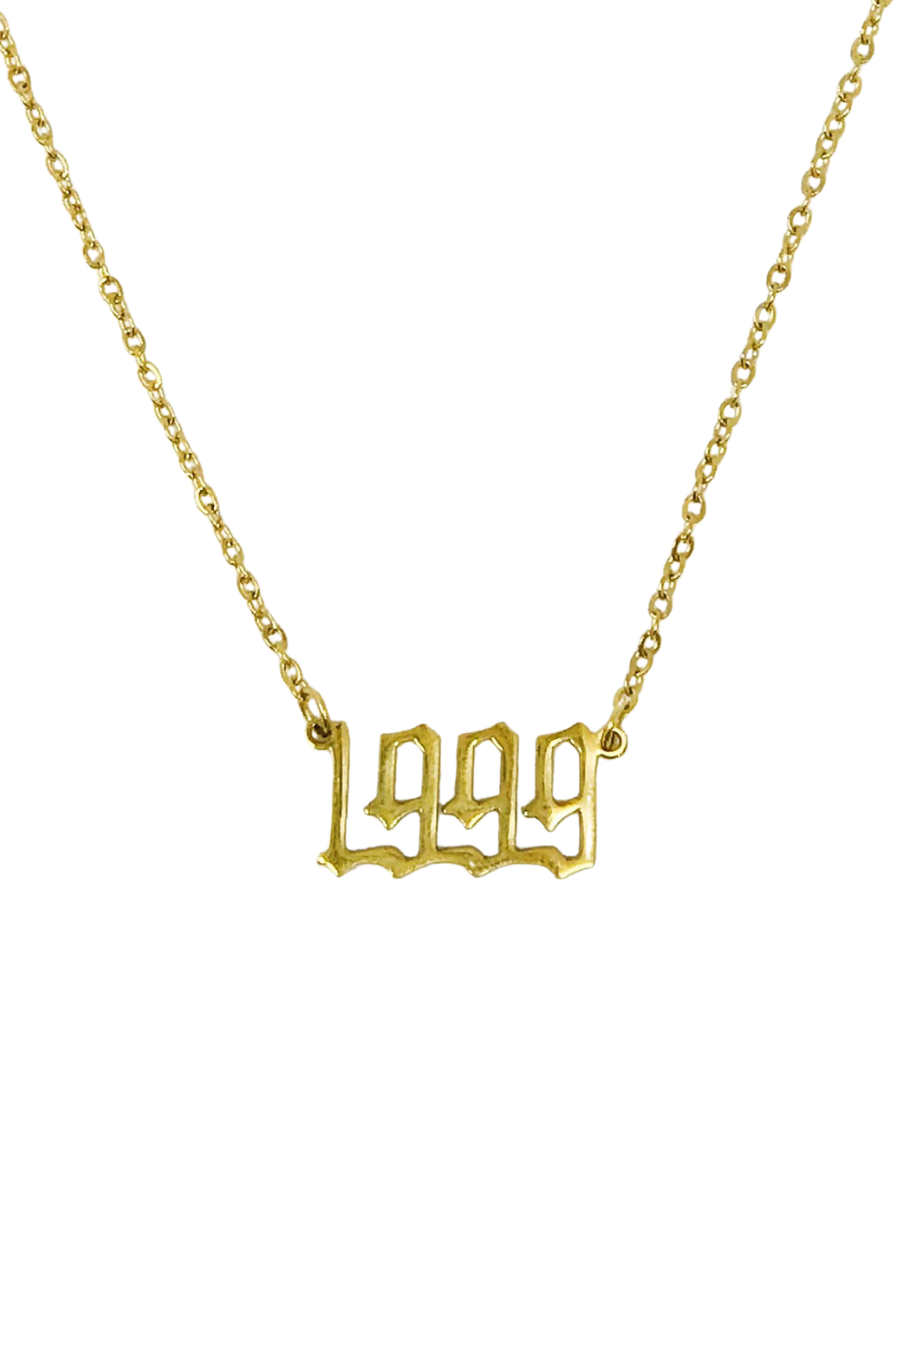 Birth Year Necklace - 1999